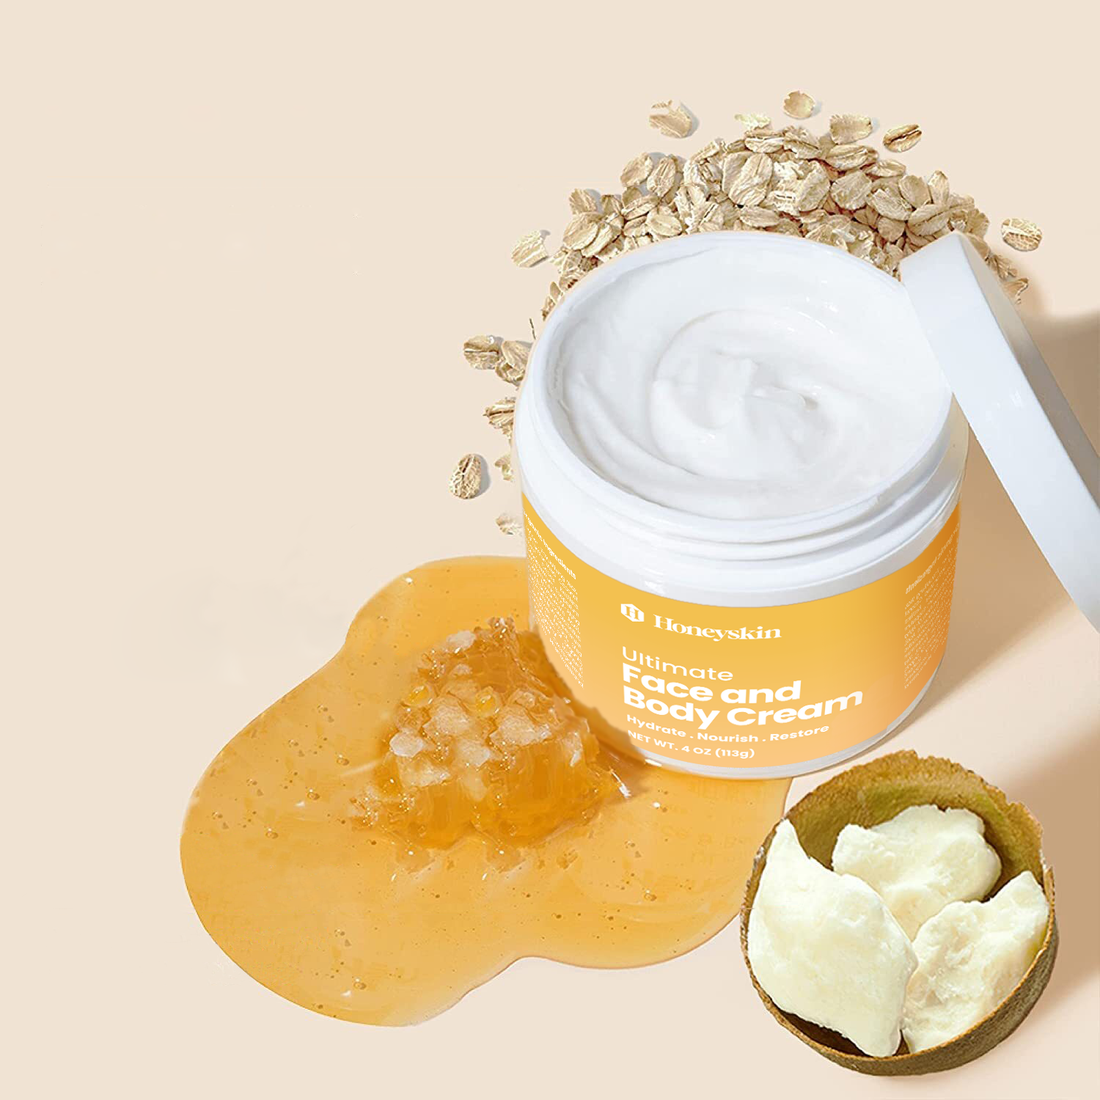 Ultimate Skincare Benefits of Honeyskin’s Best-Selling Face & Body Cream